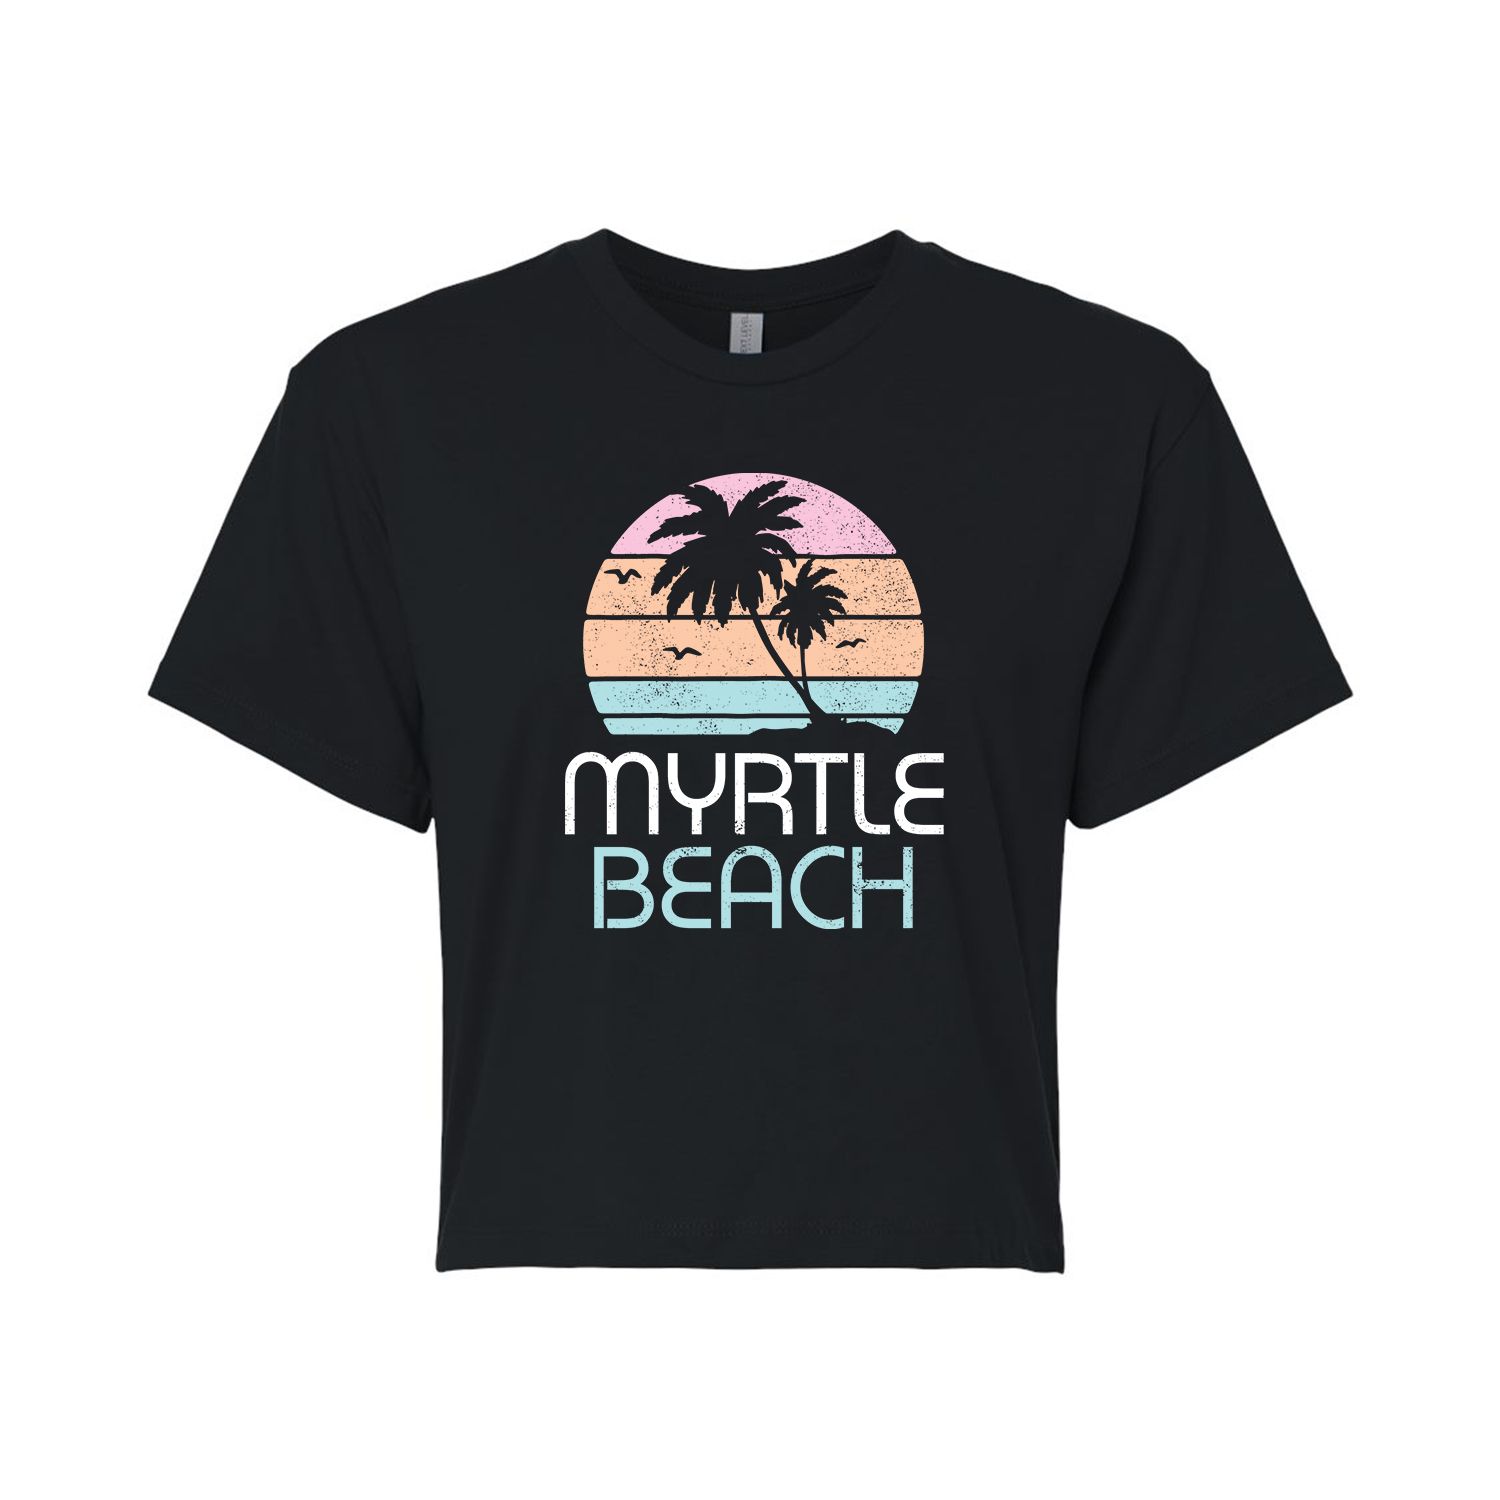 Укороченная футболка с рисунком Myrtle Beach для юниоров Licensed Character